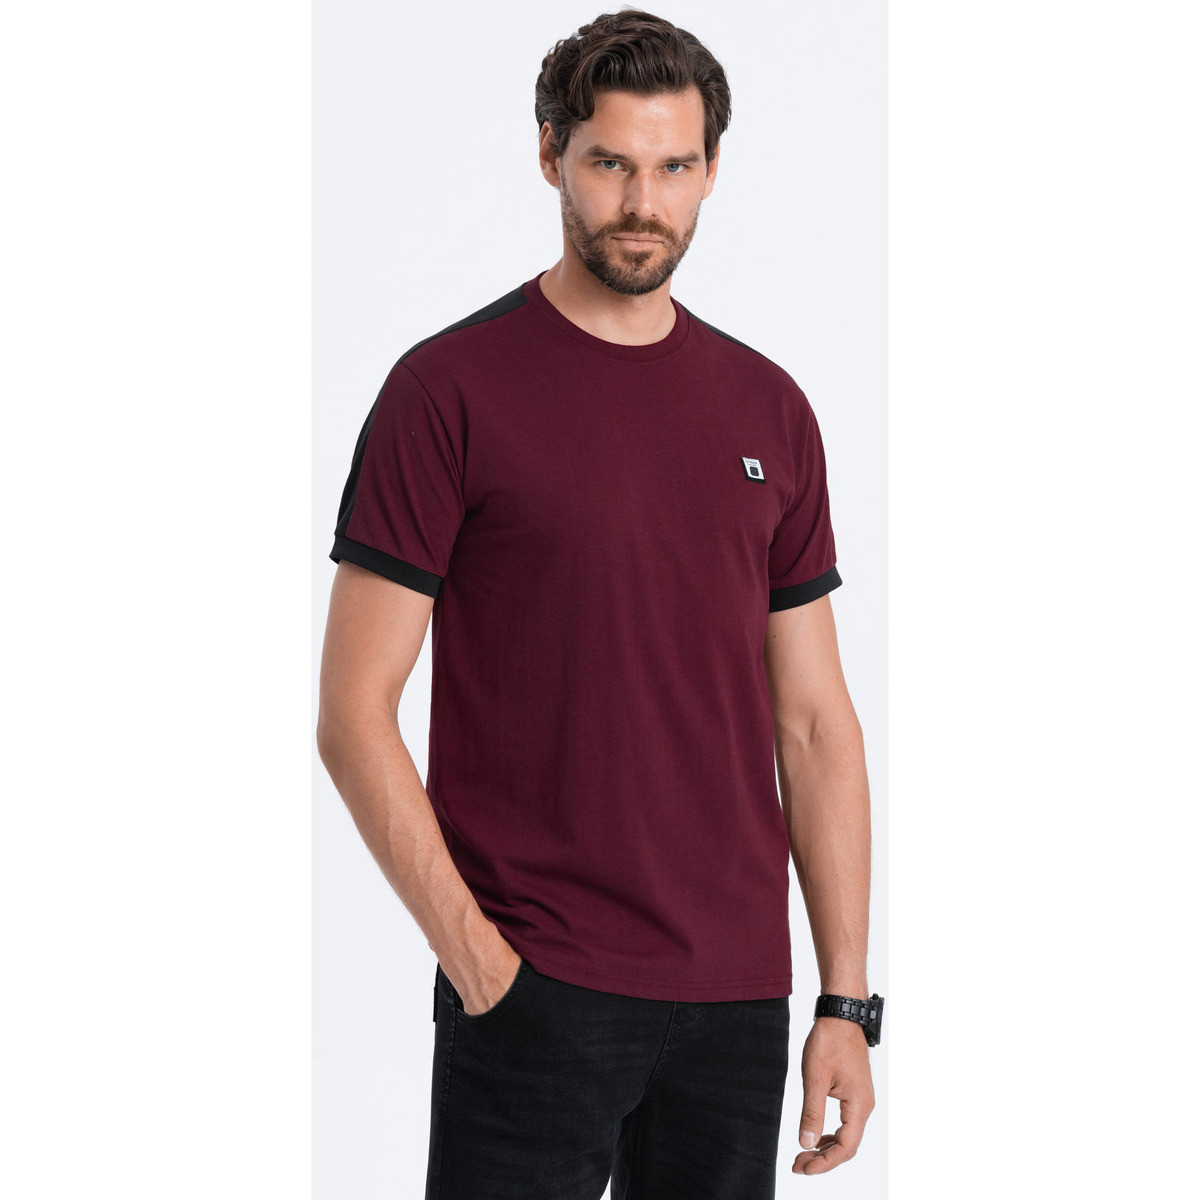 Ombre  Men apos;s cotton t-shirt with contrasting inserts  ruznobarevne